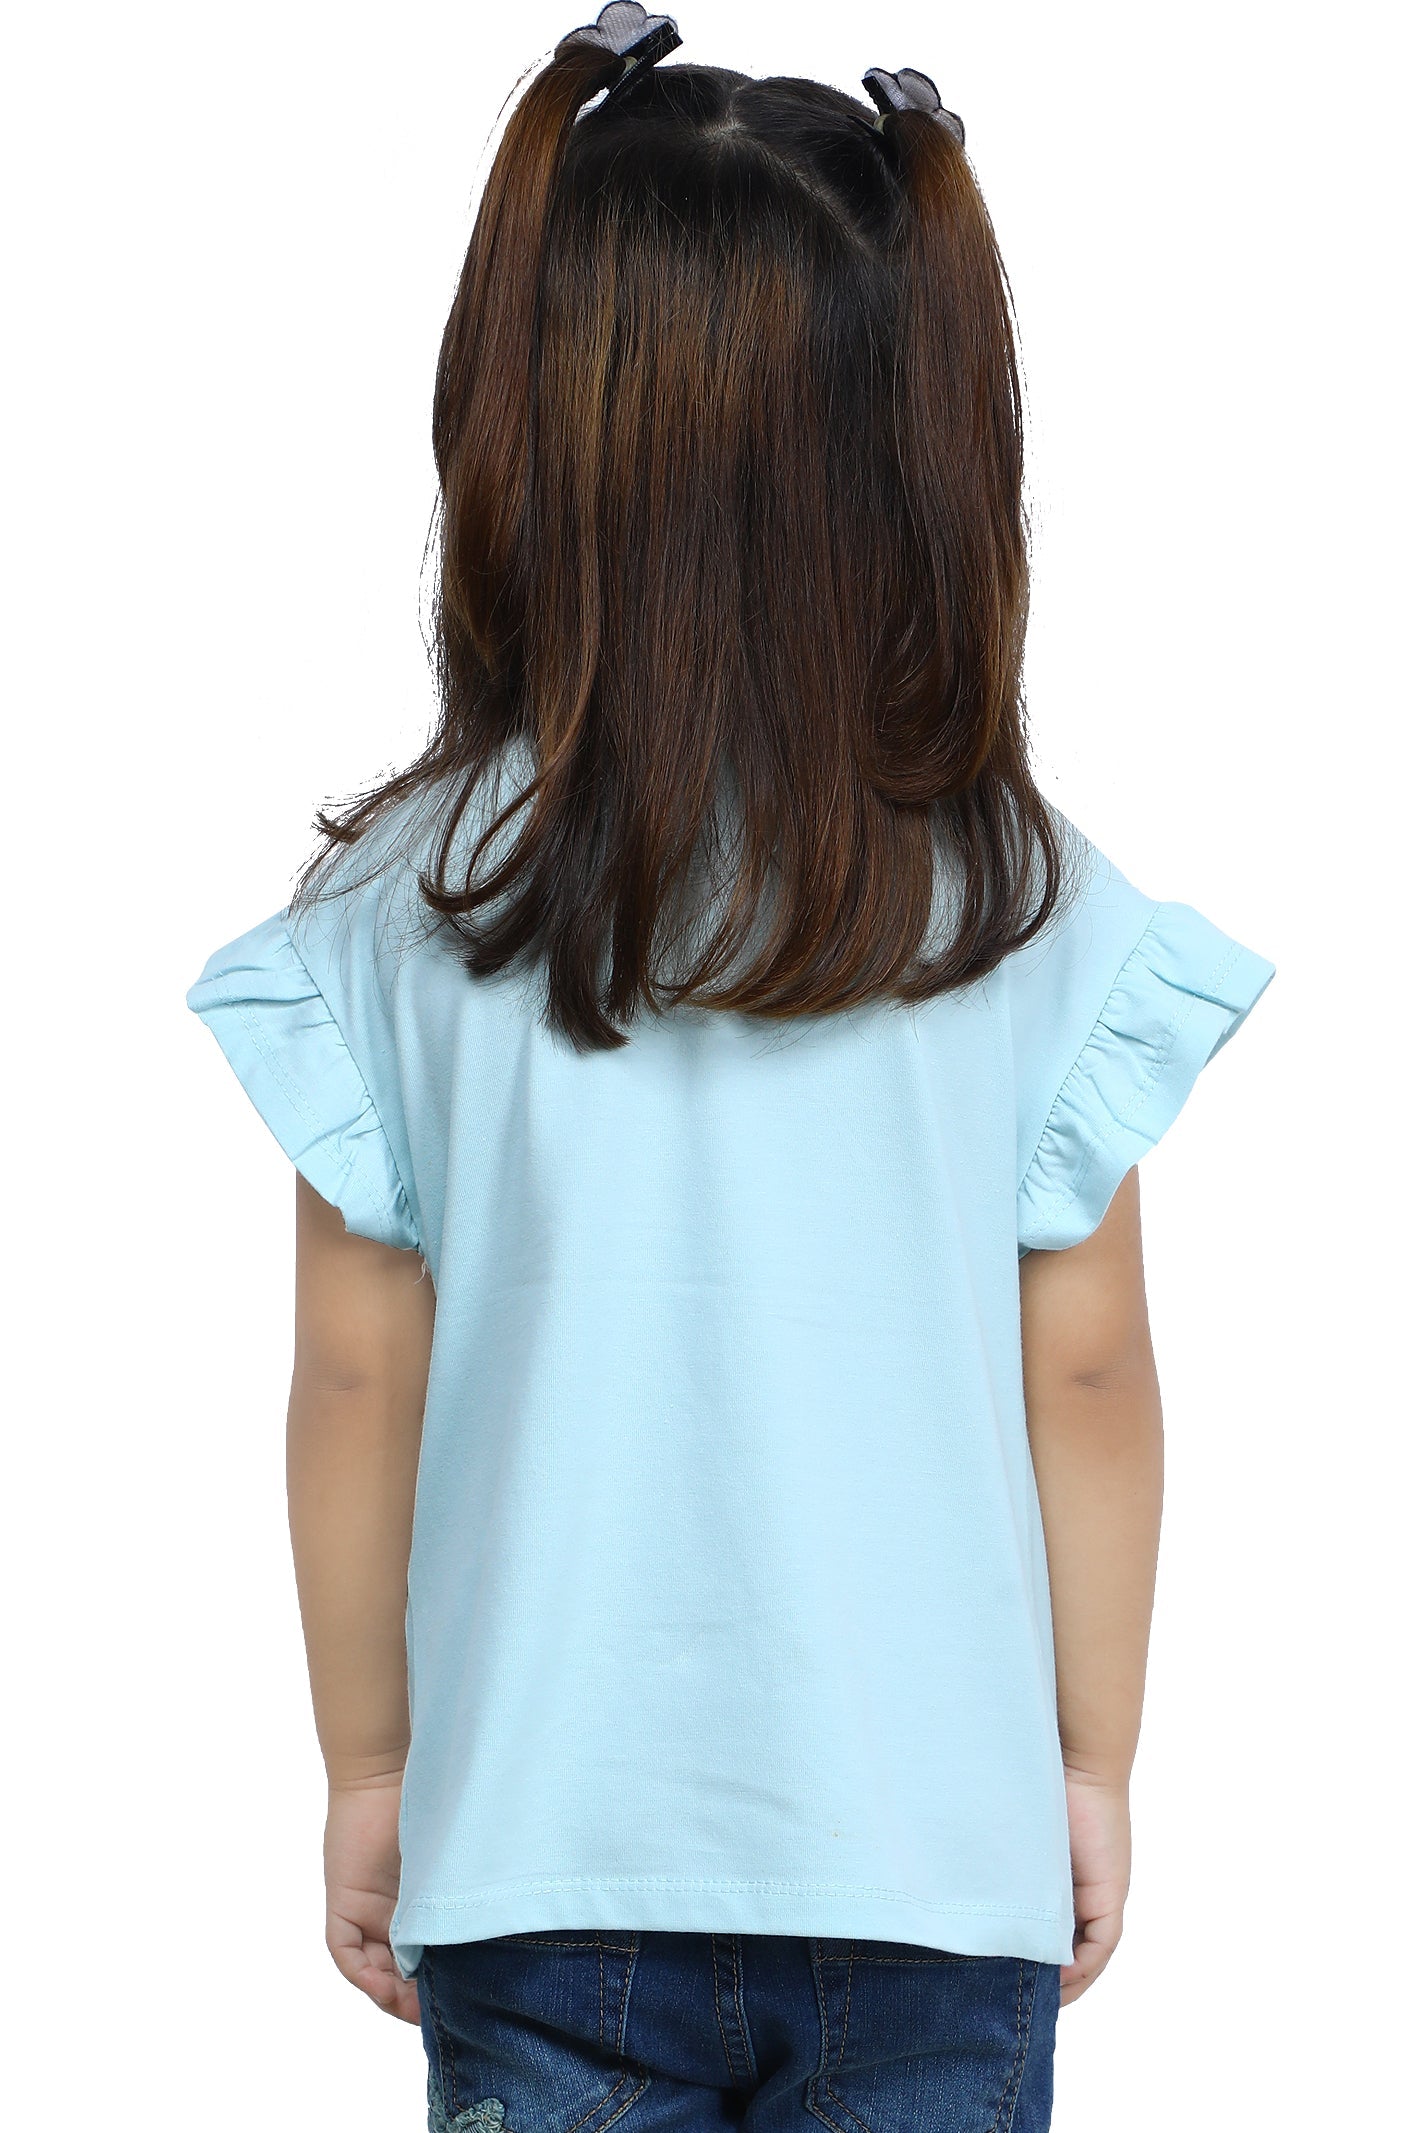 Girls T-Shirt In Aqua SKU: KGA-0269-AQUA - Diners